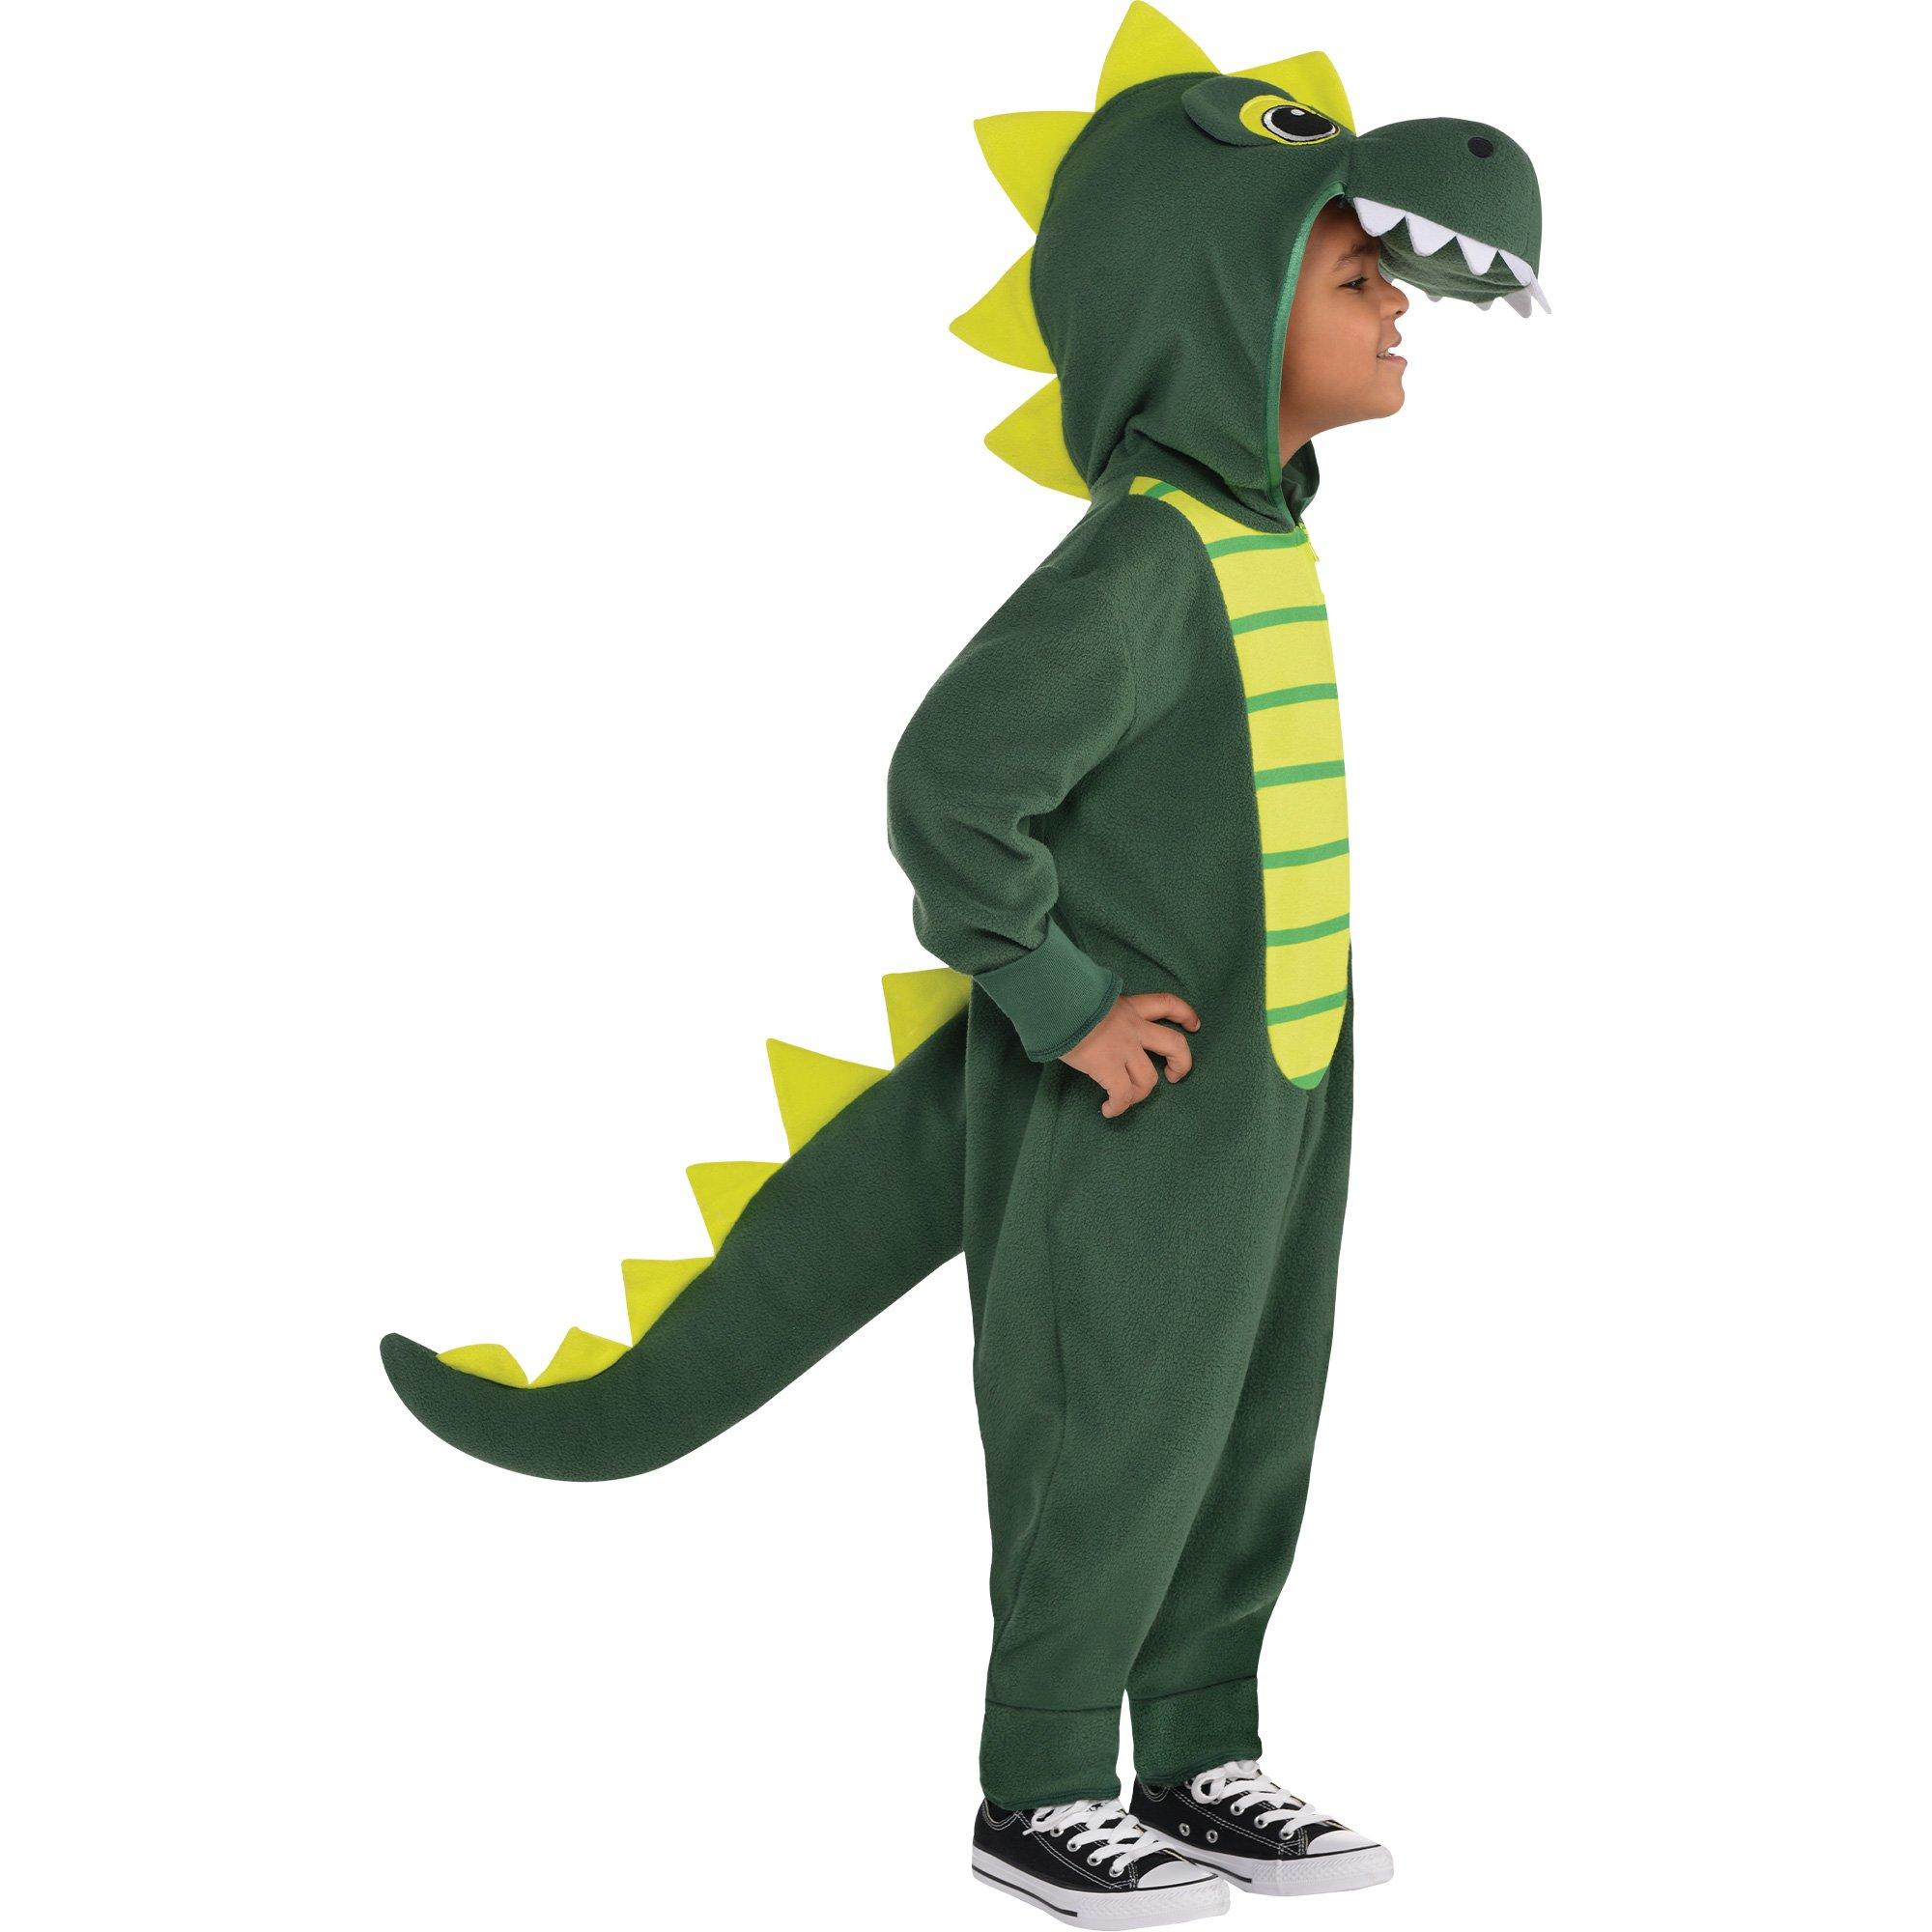 Toddler Zipster Dinosaur One Piece Costume